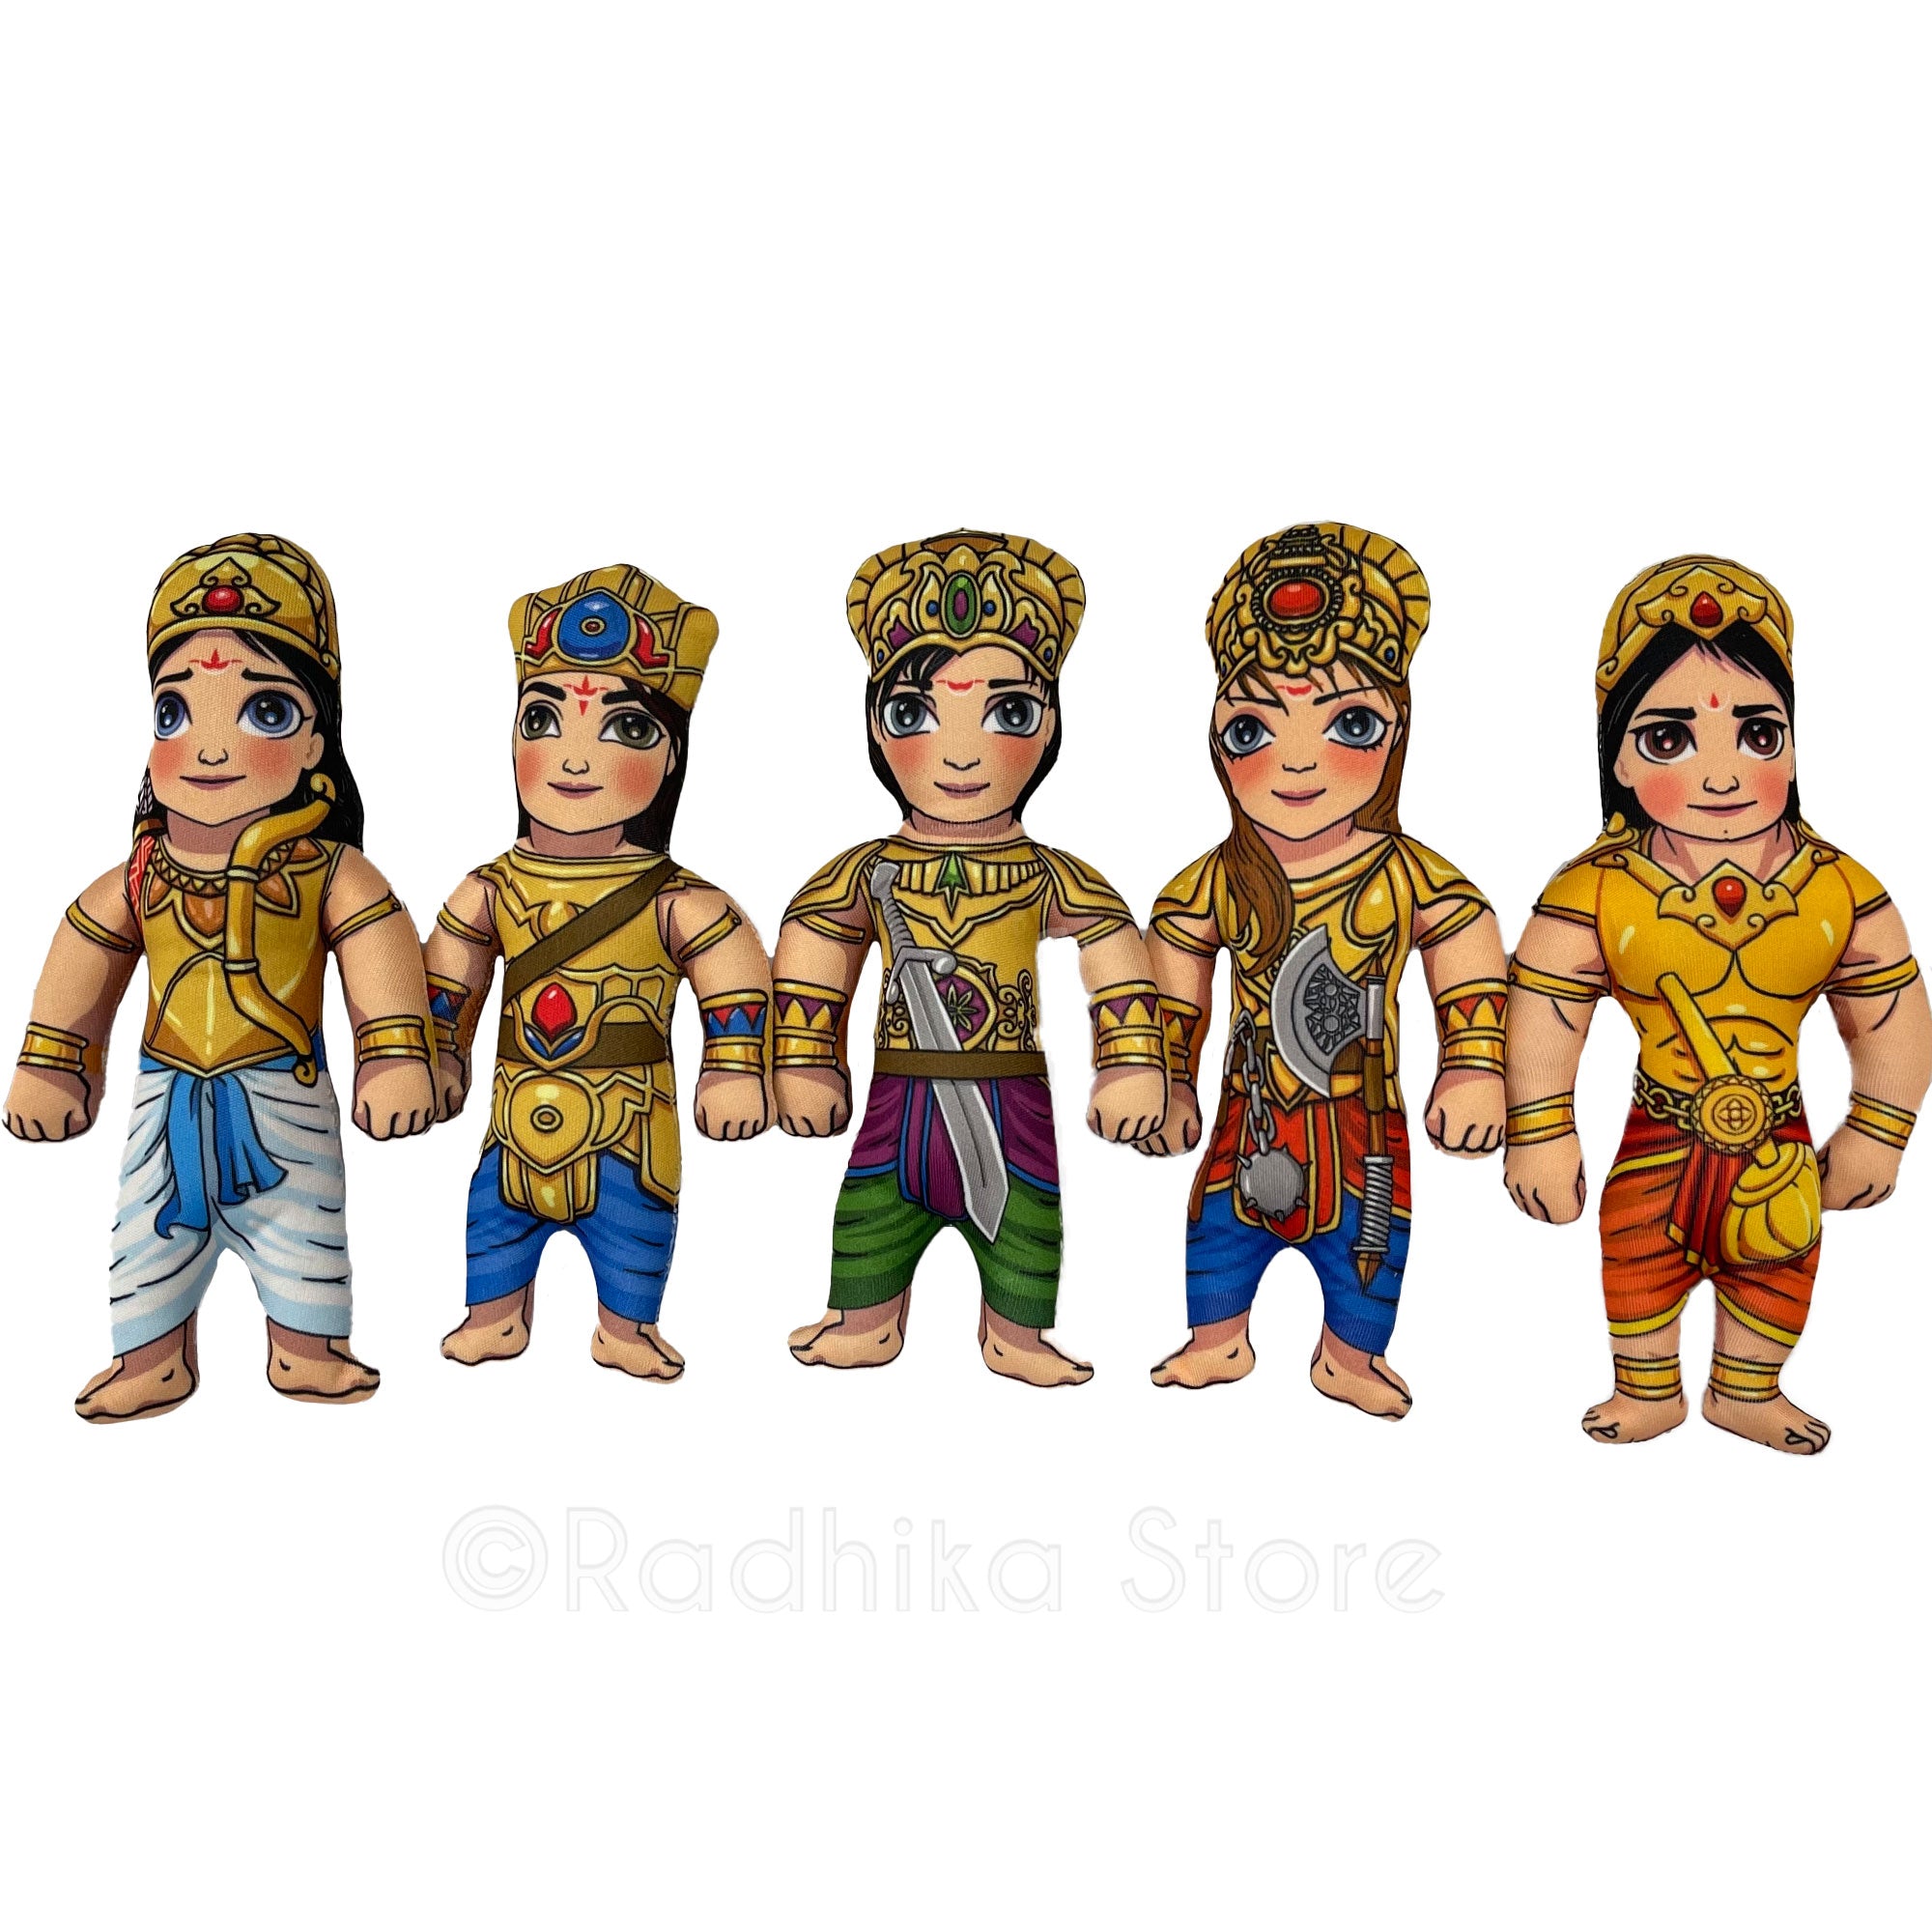 The Pandavas - Transcendental Dolls